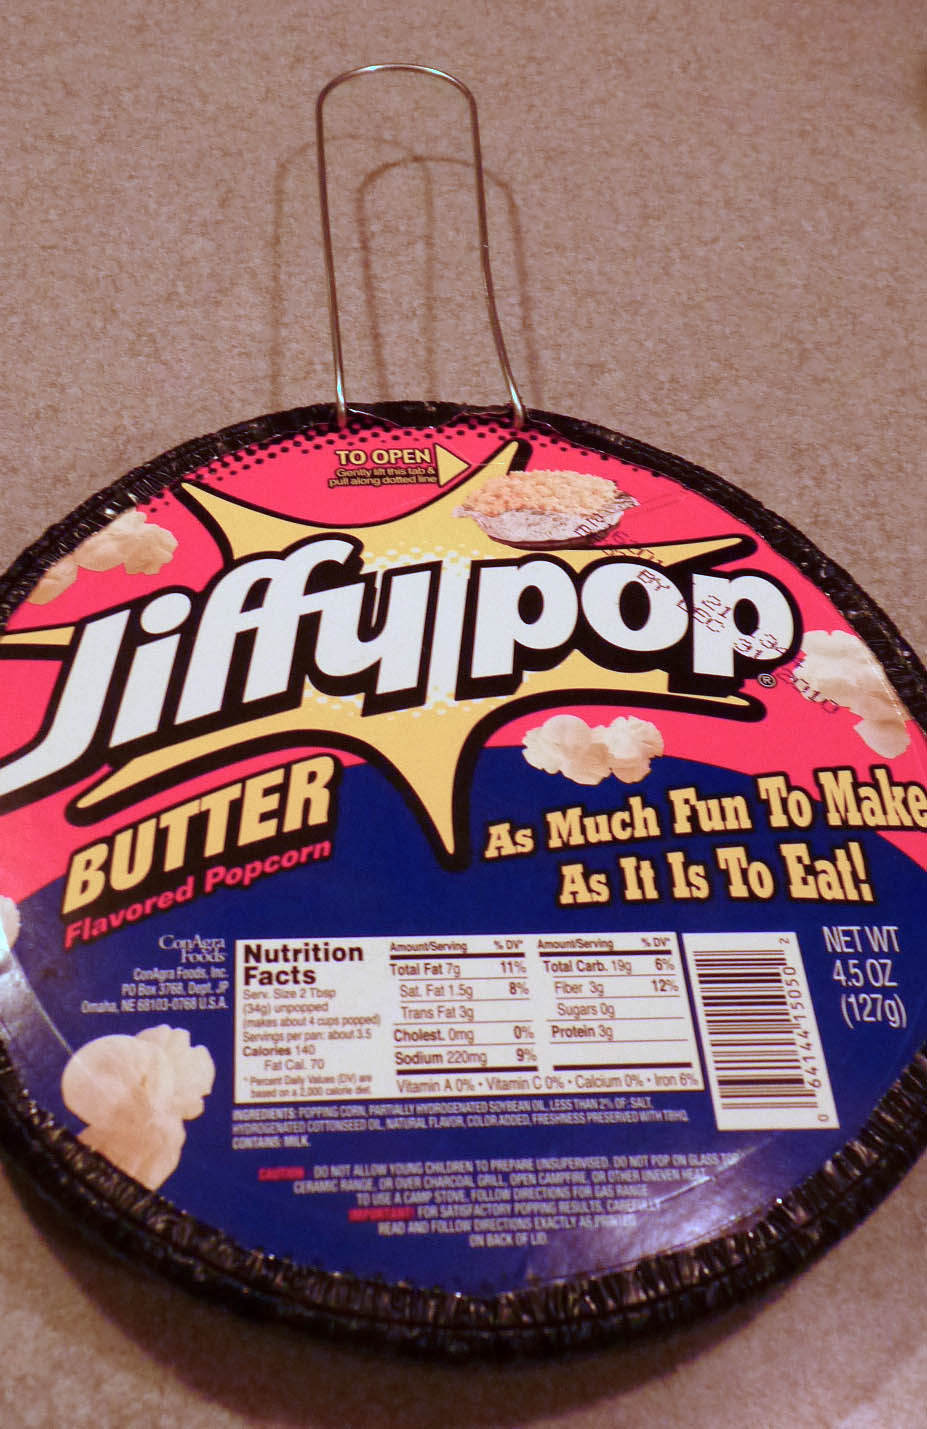 Jiffy Pop Popcorn